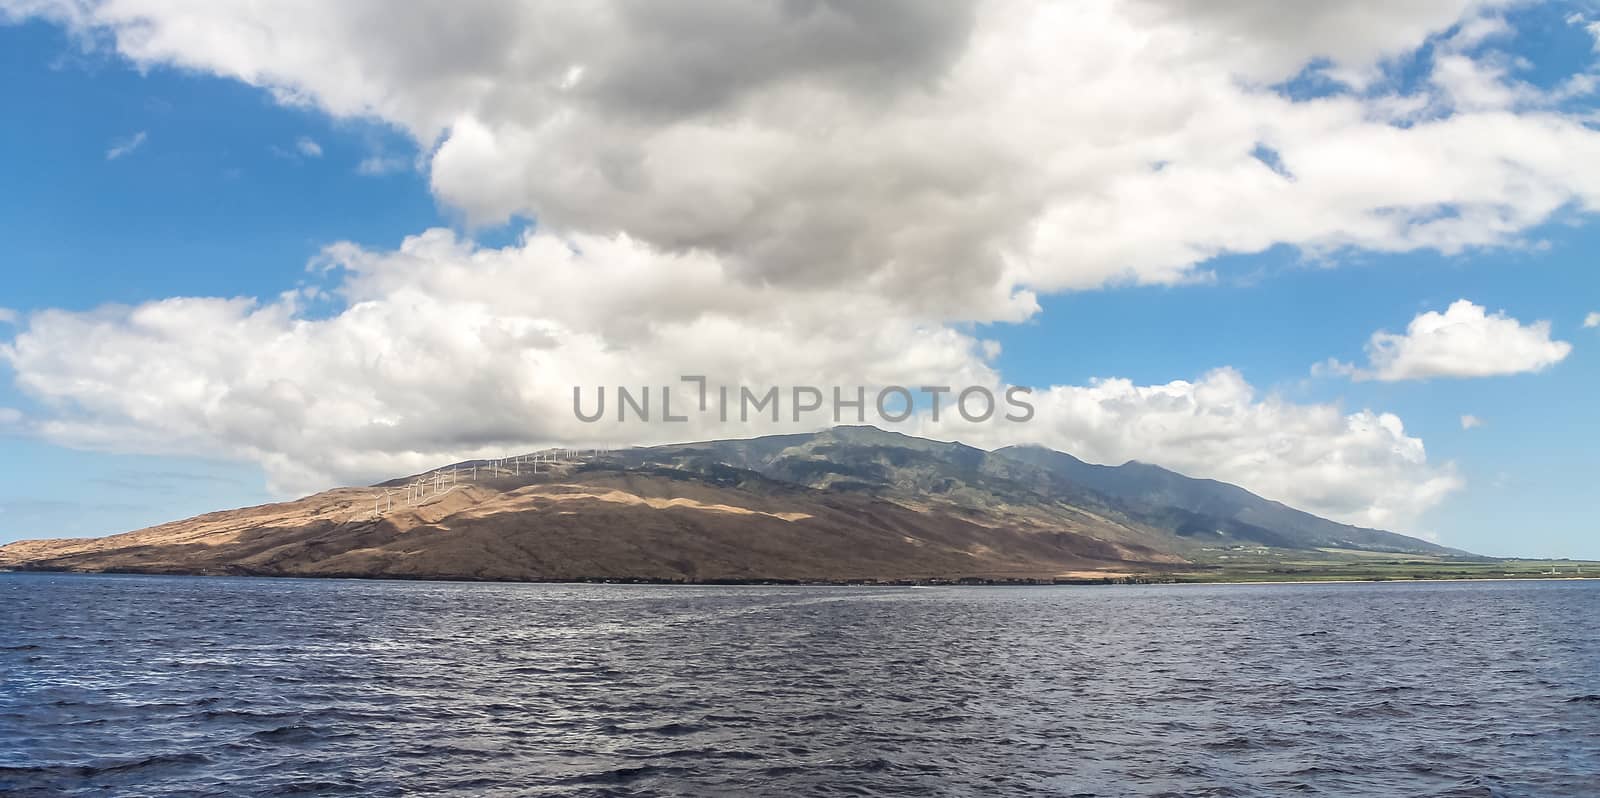 Maui island panorama by Alexanderphoto